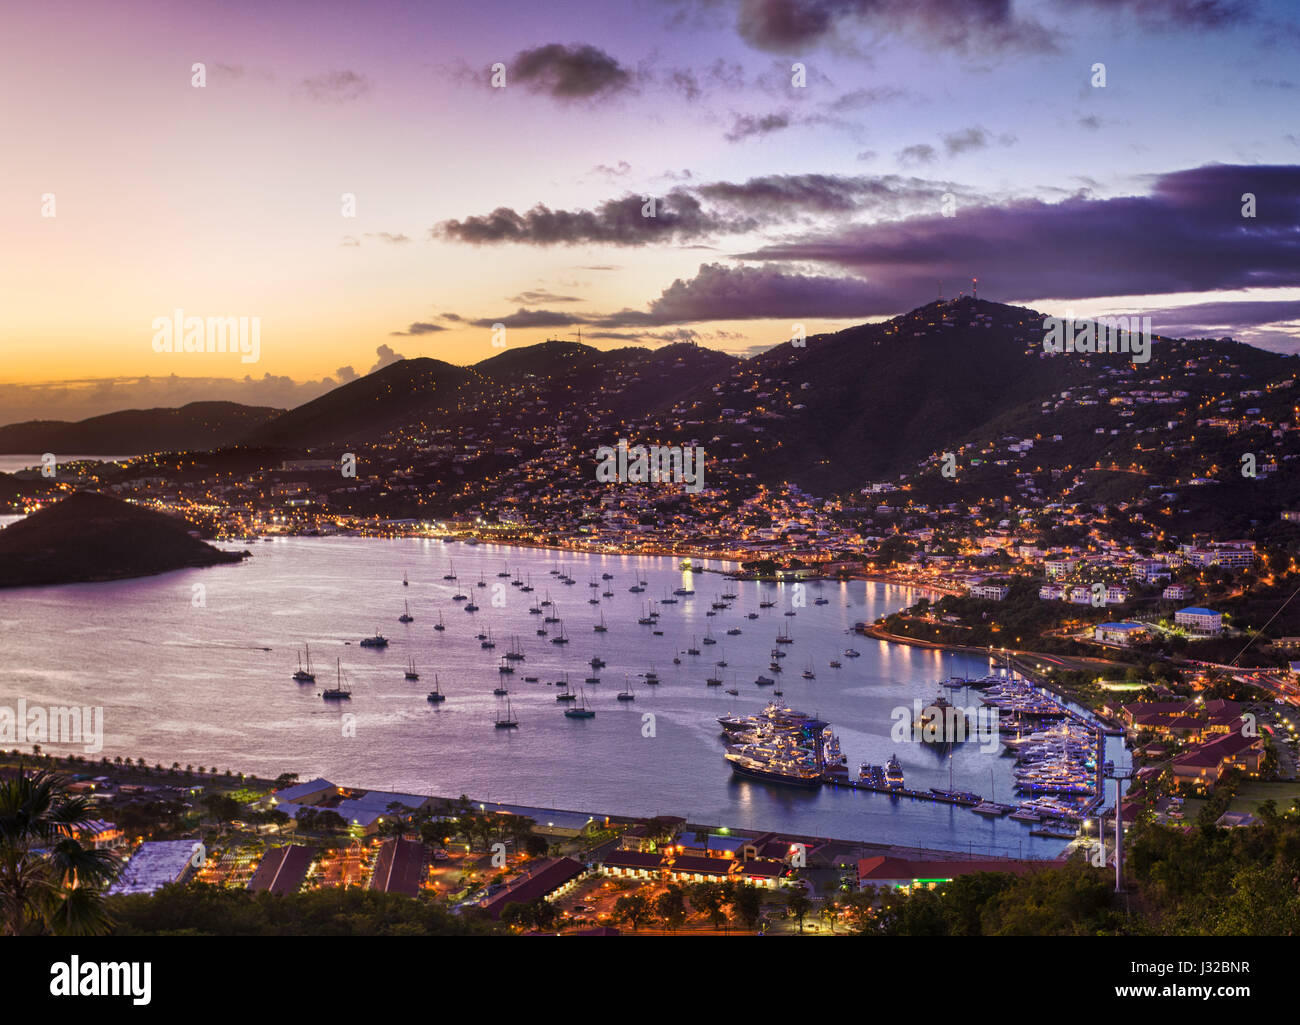 Charlotte Amalie, St Thomas, US Virgin islands, Caribbean, overlooking the harbor at sunset Stock Photo